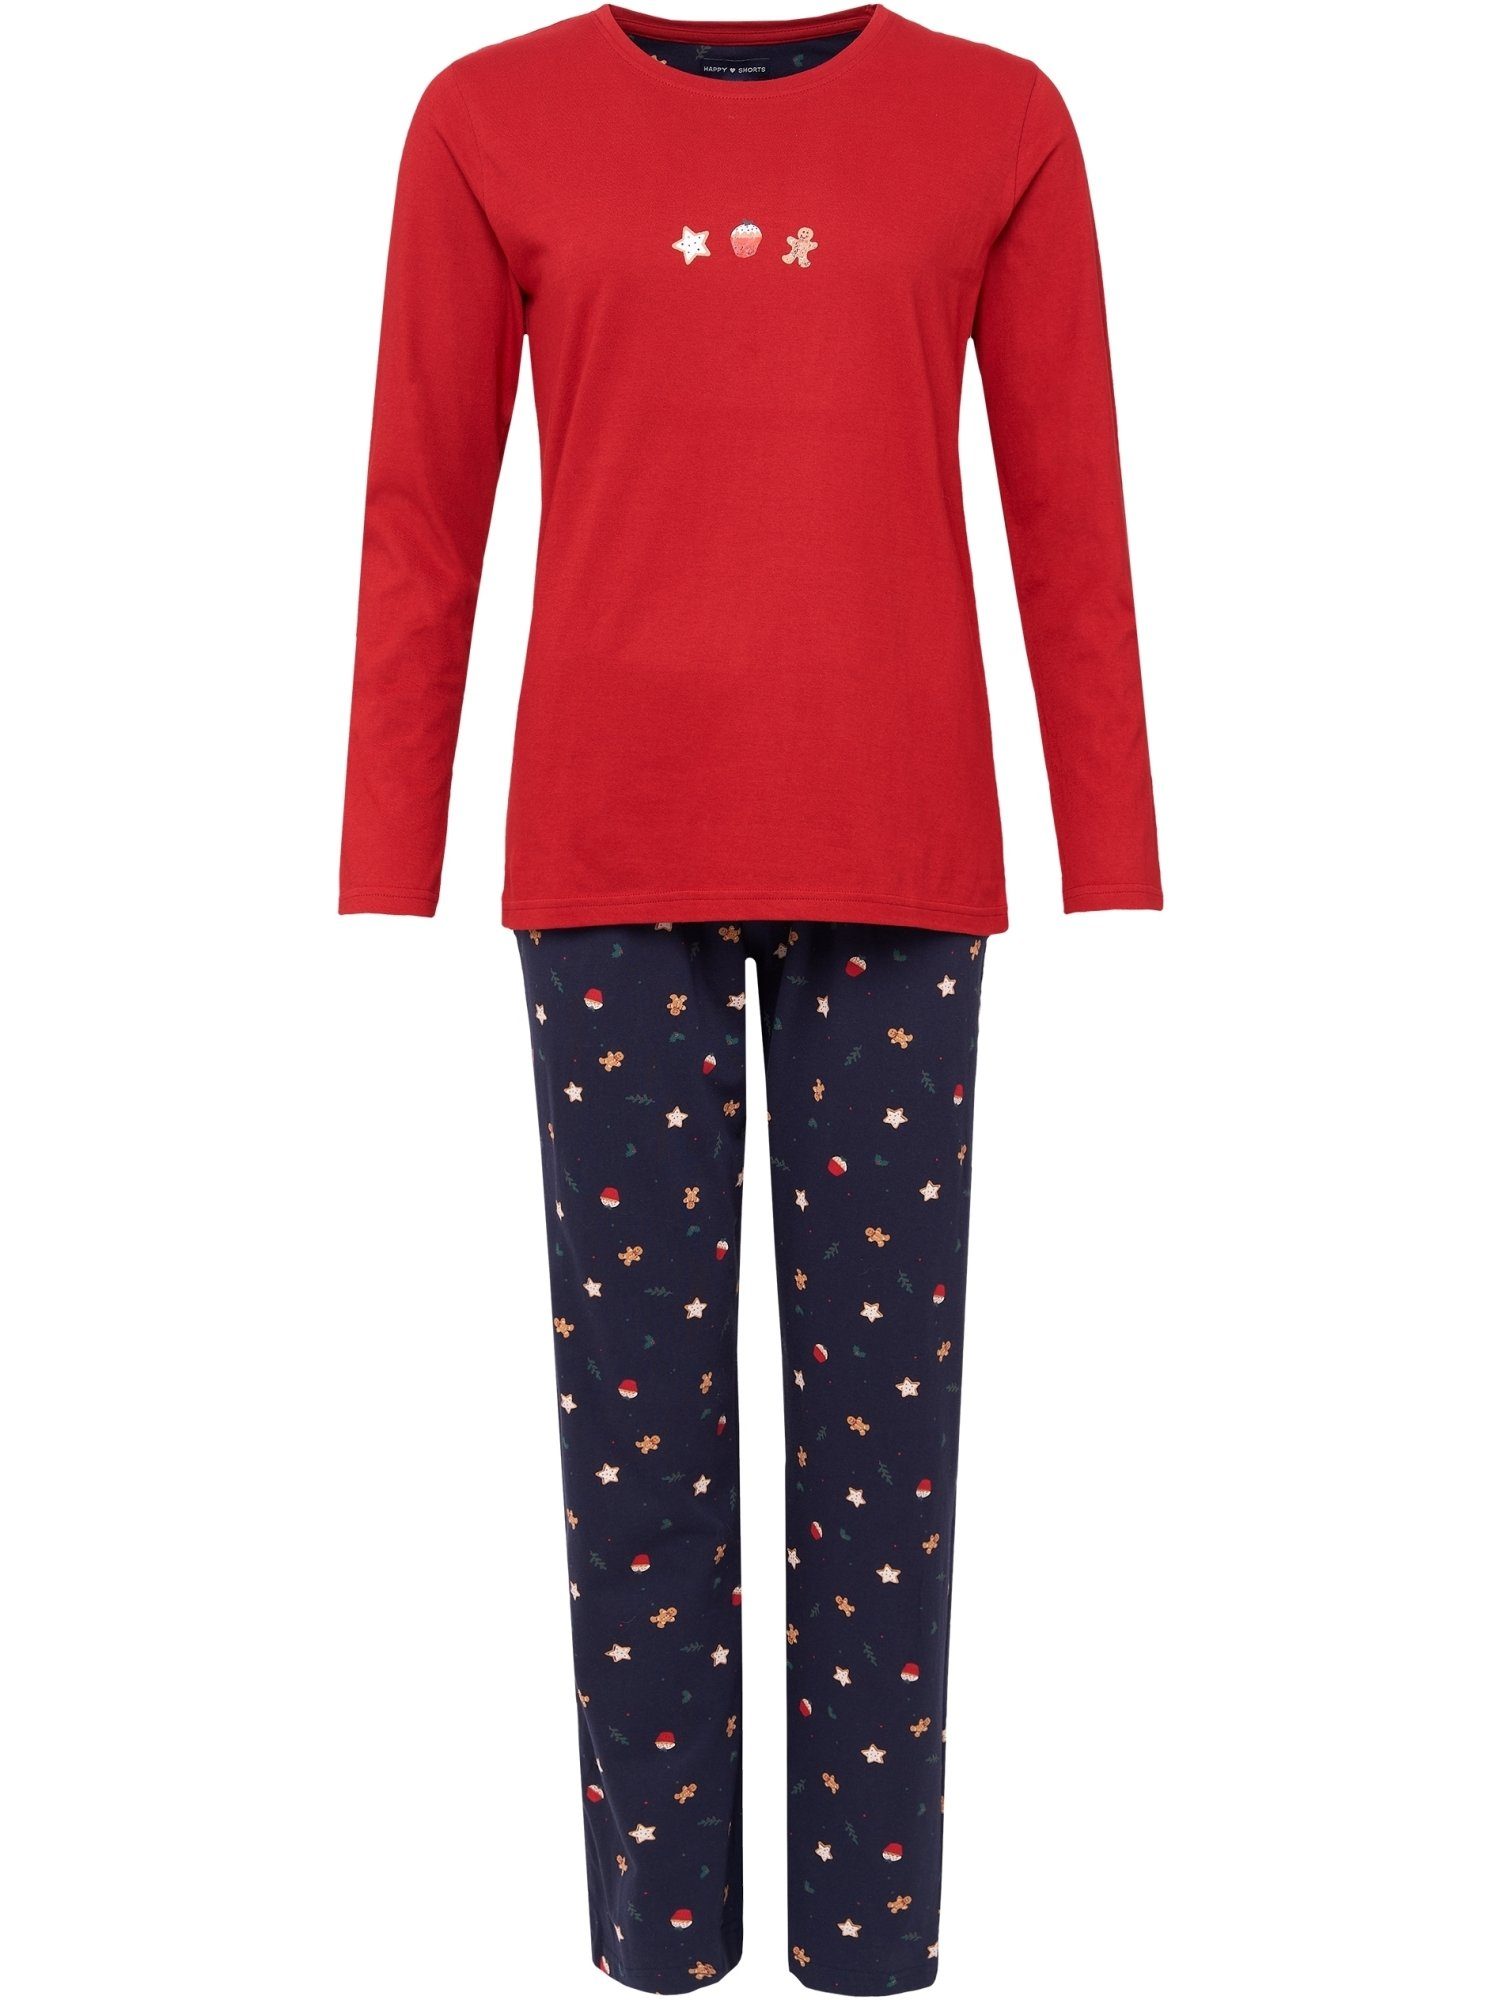 HAPPY SHORTS Pyjama Xmas (2 tlg) schlafanzug schlafmode bequem gingerbreadred